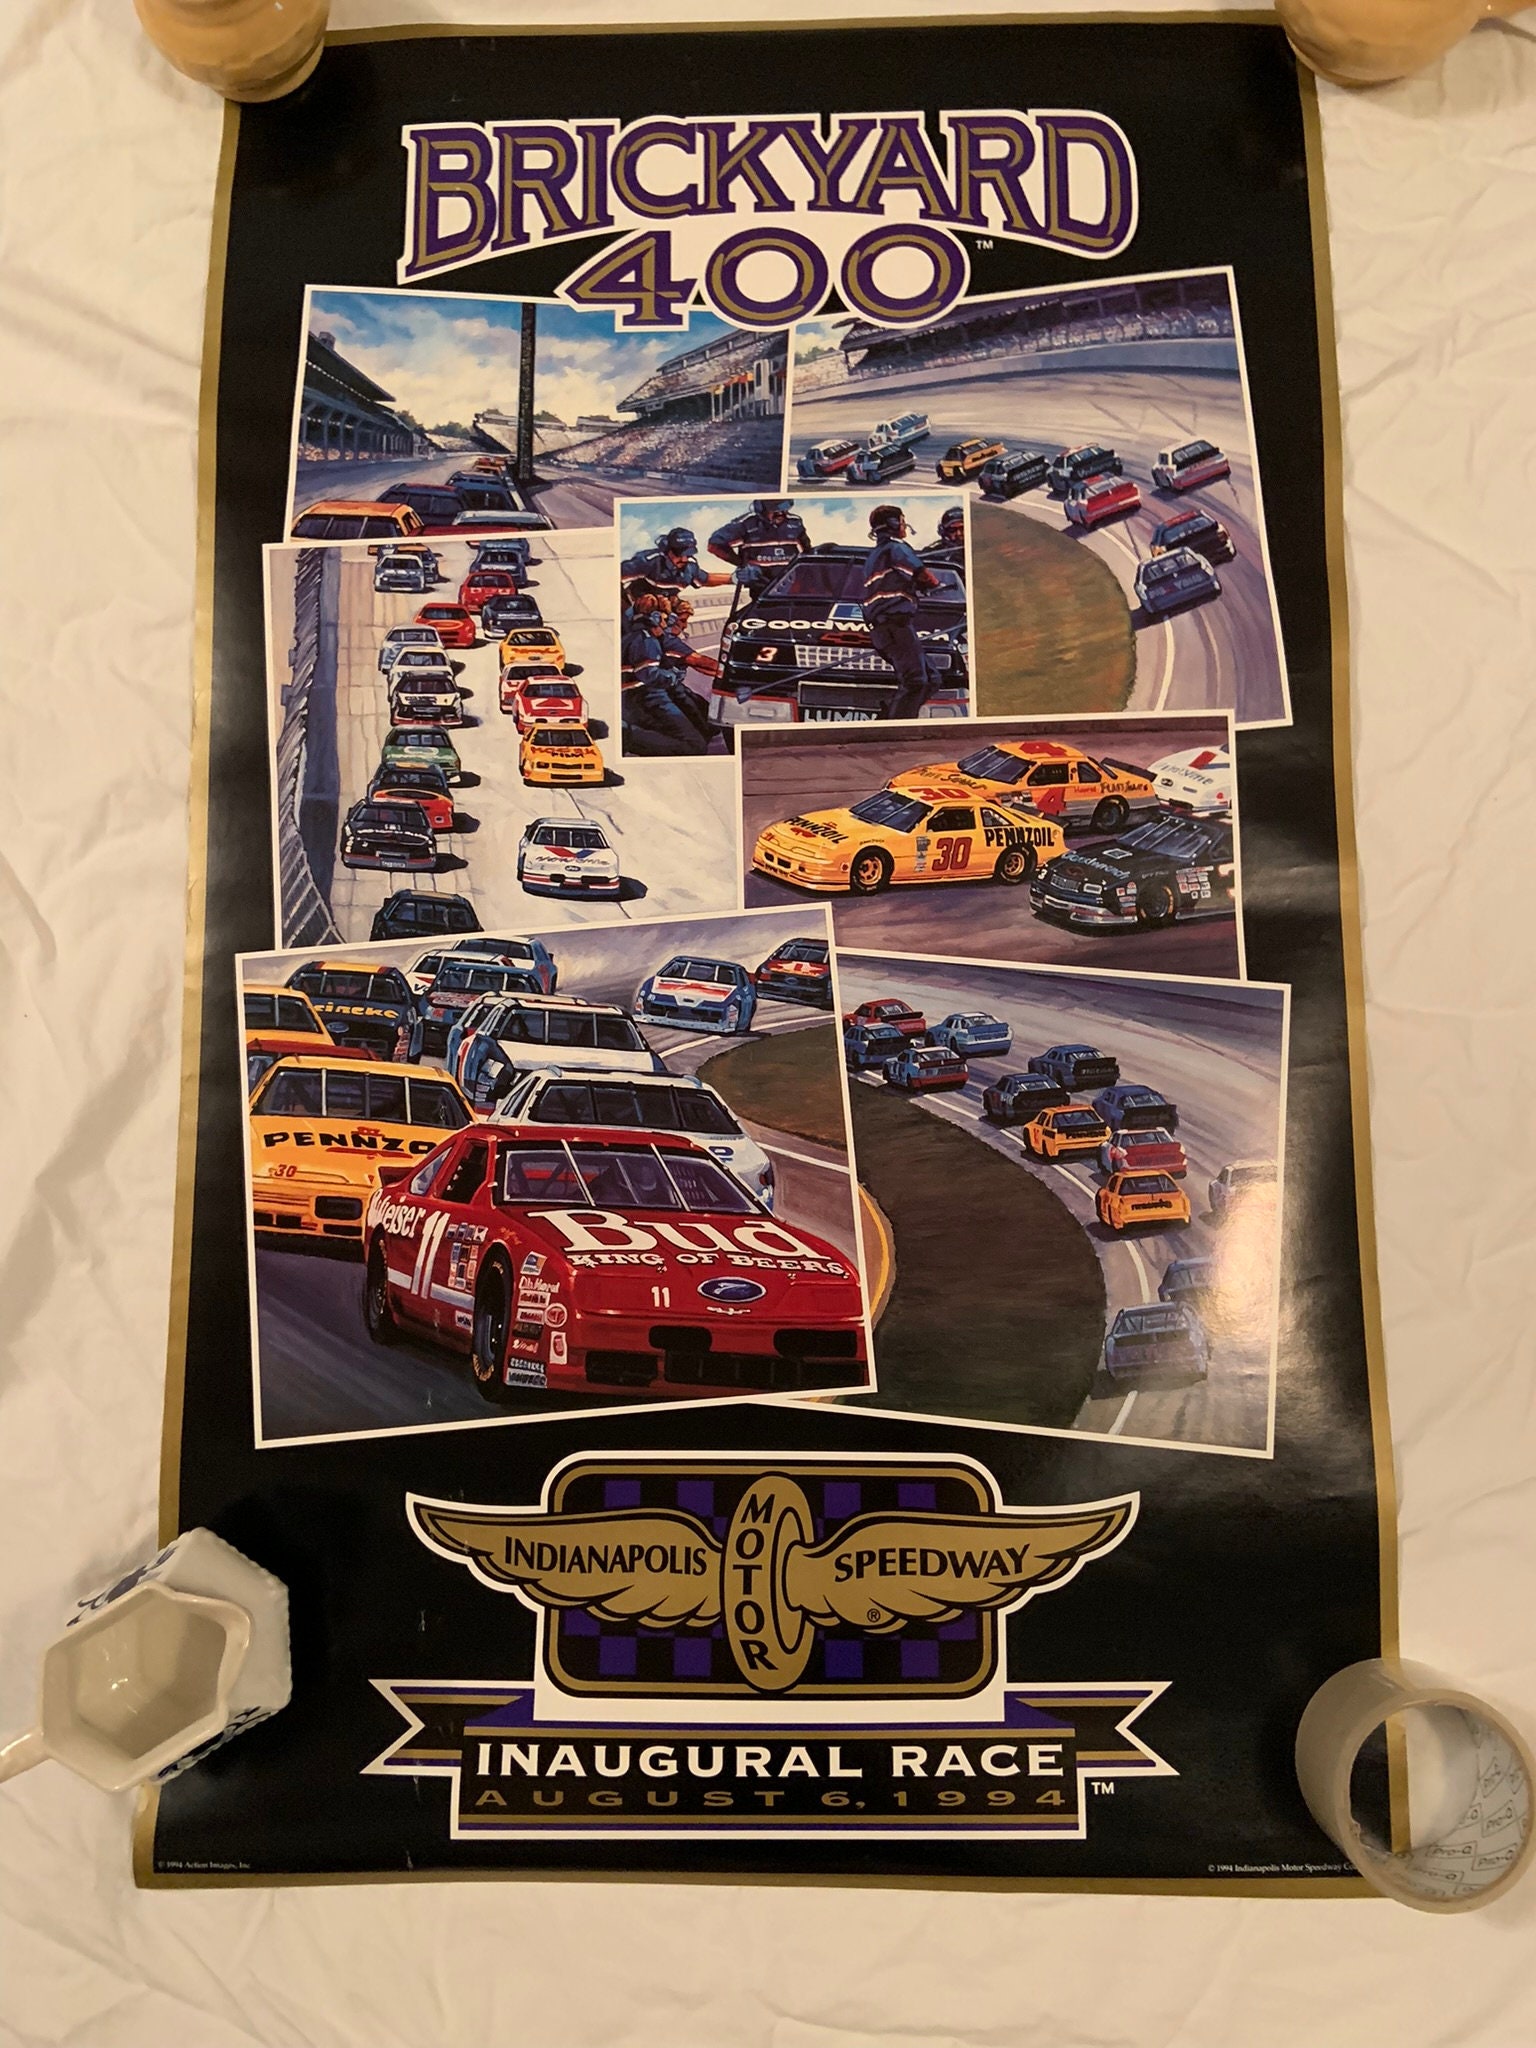 Buy Brickyard 500 Inaugural Race Indianapolis Motor Speedway Online in India